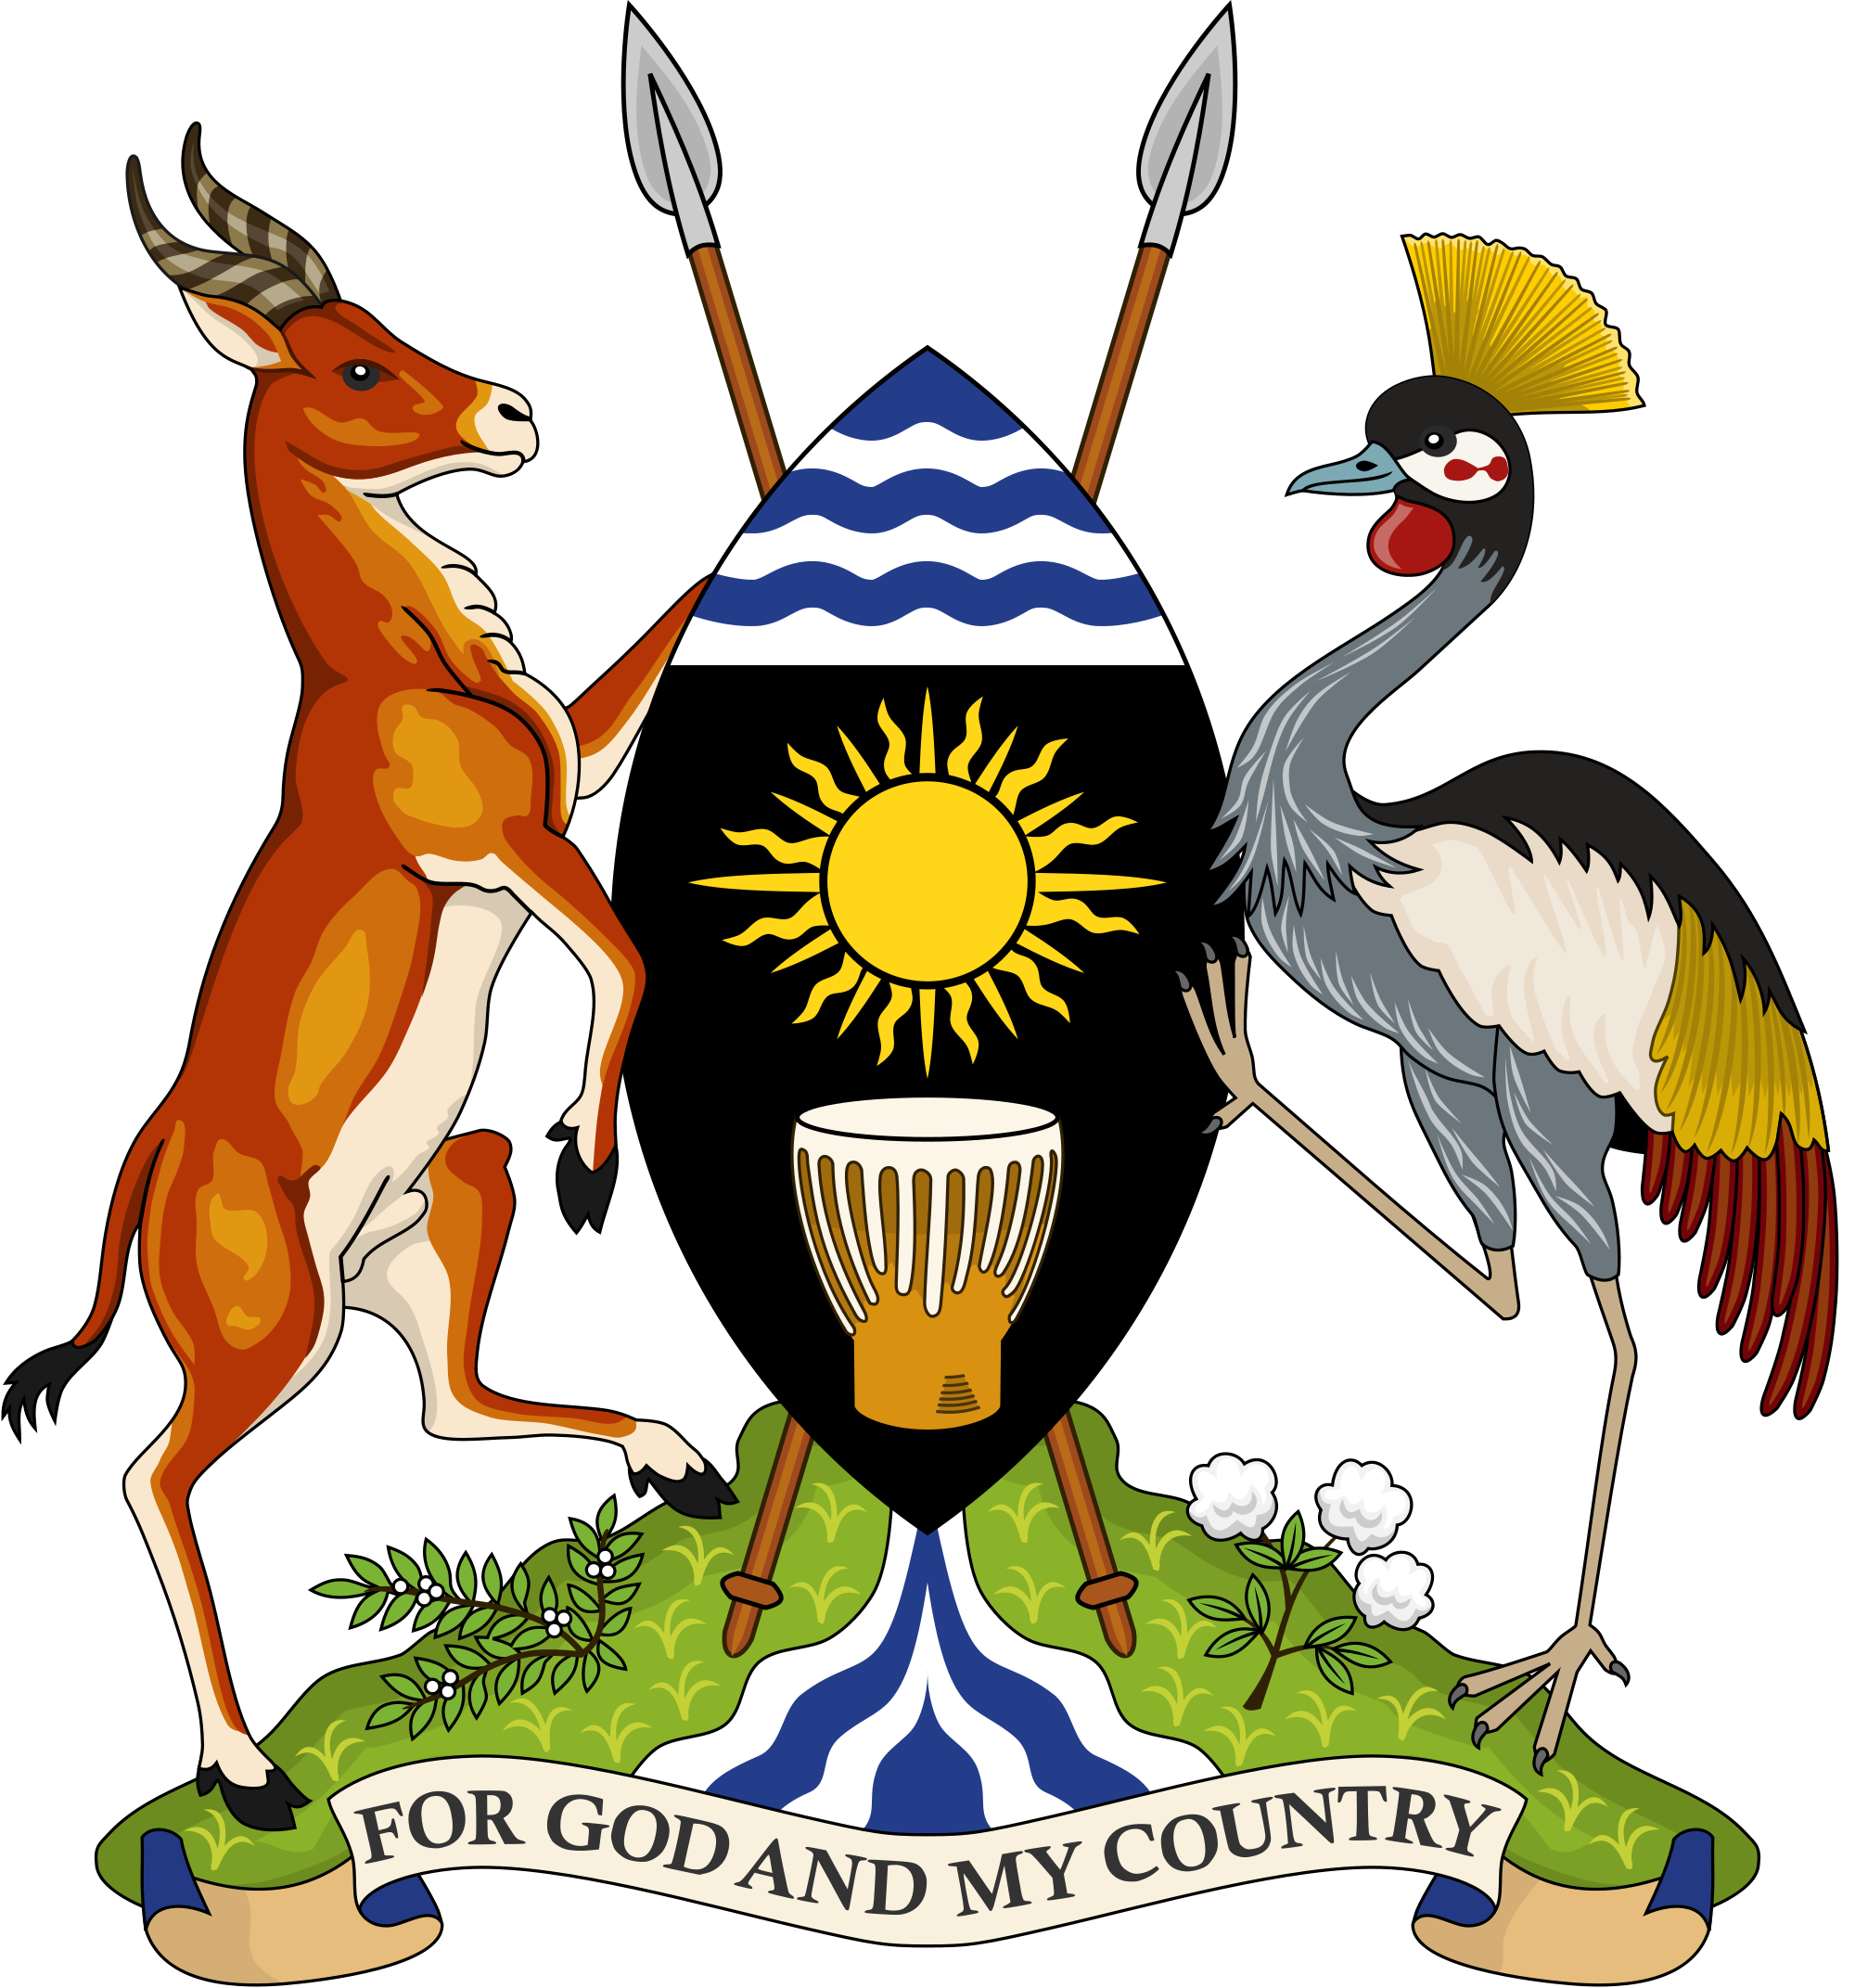 The official Emblem of the Uganda